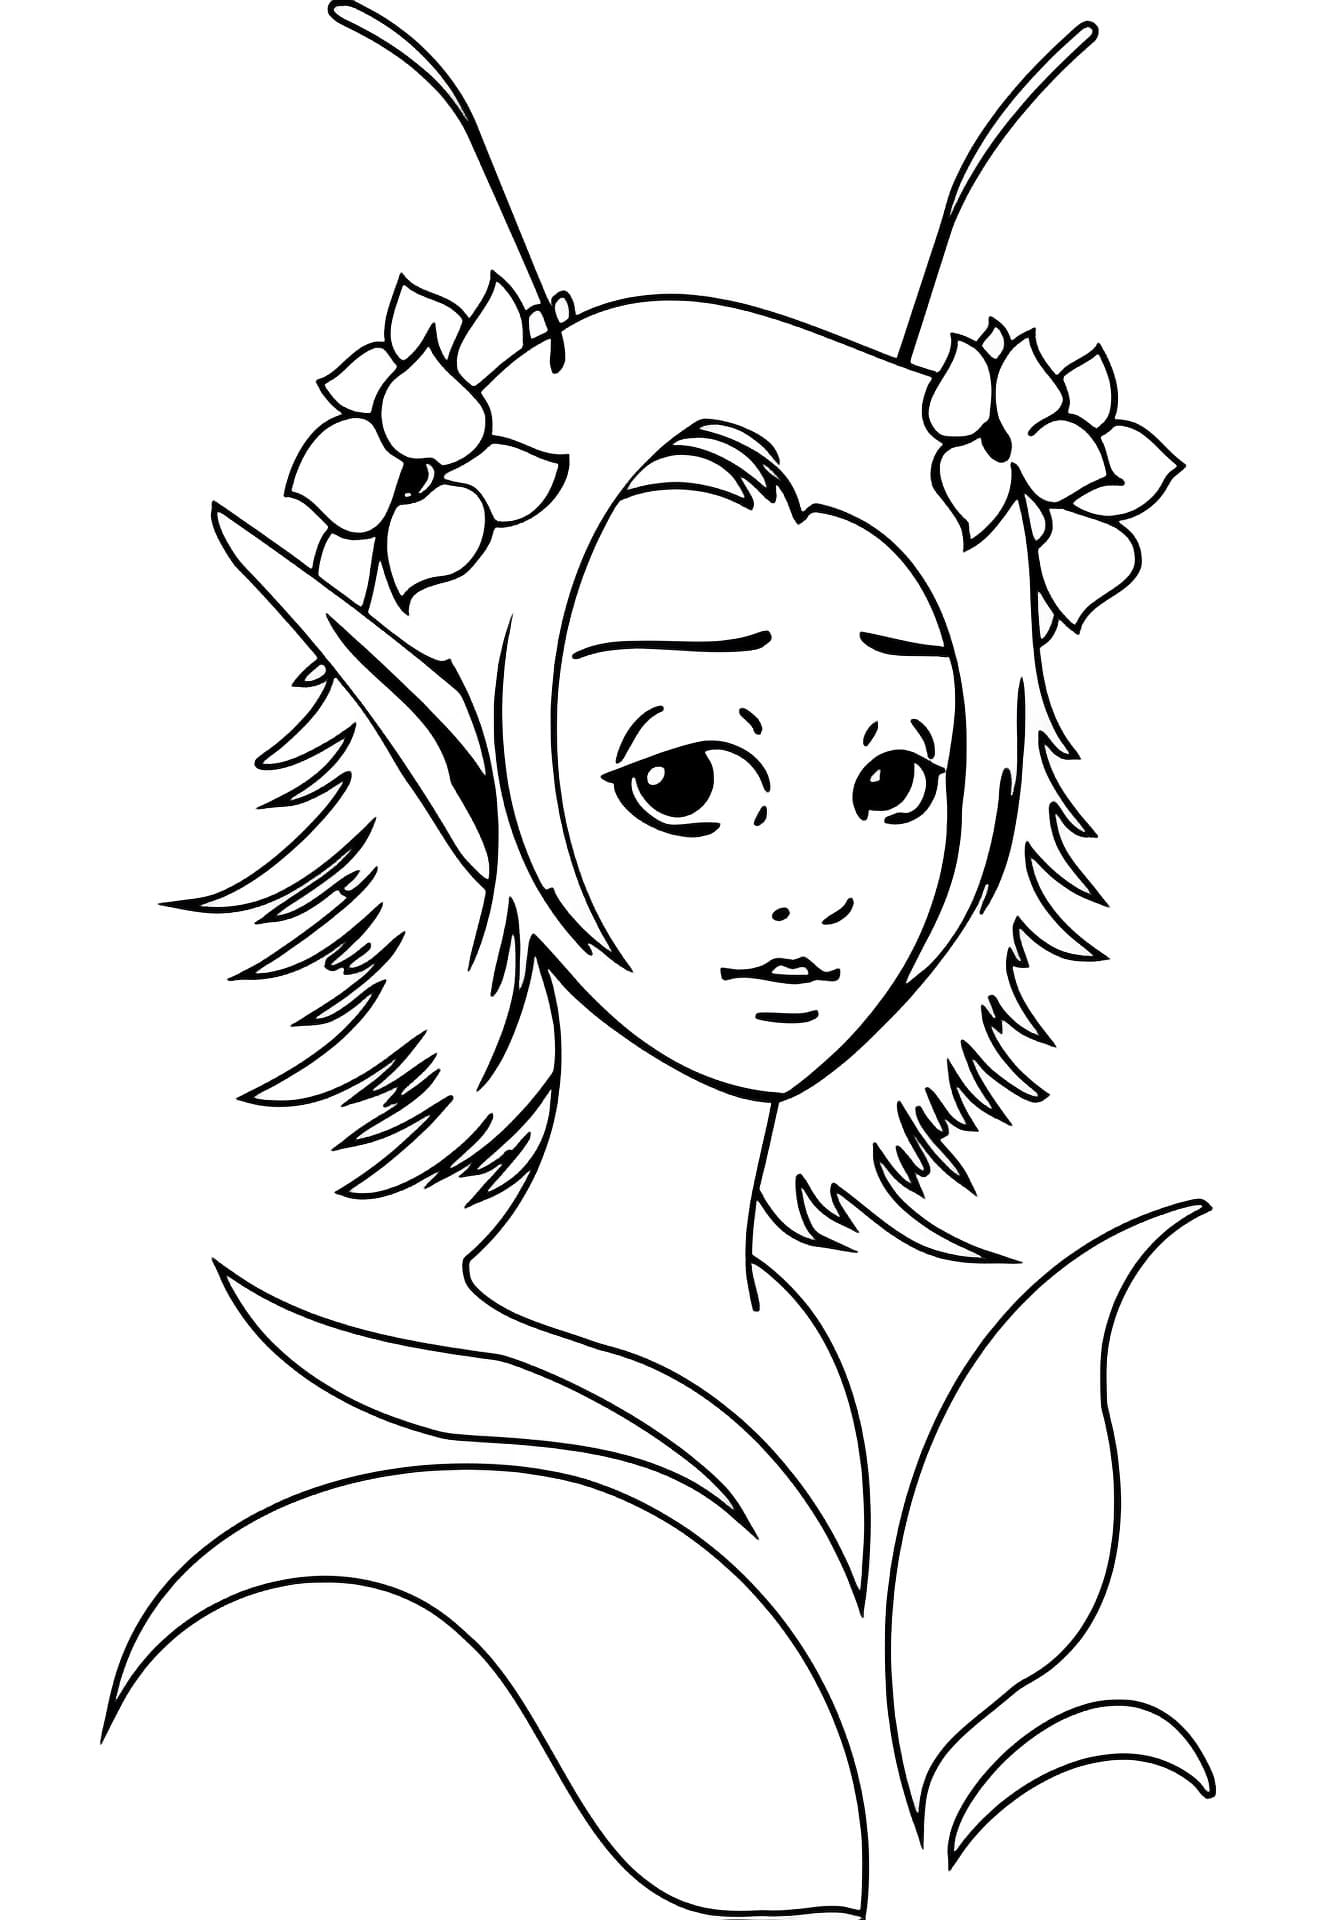 Une Jolie Elfe coloring page